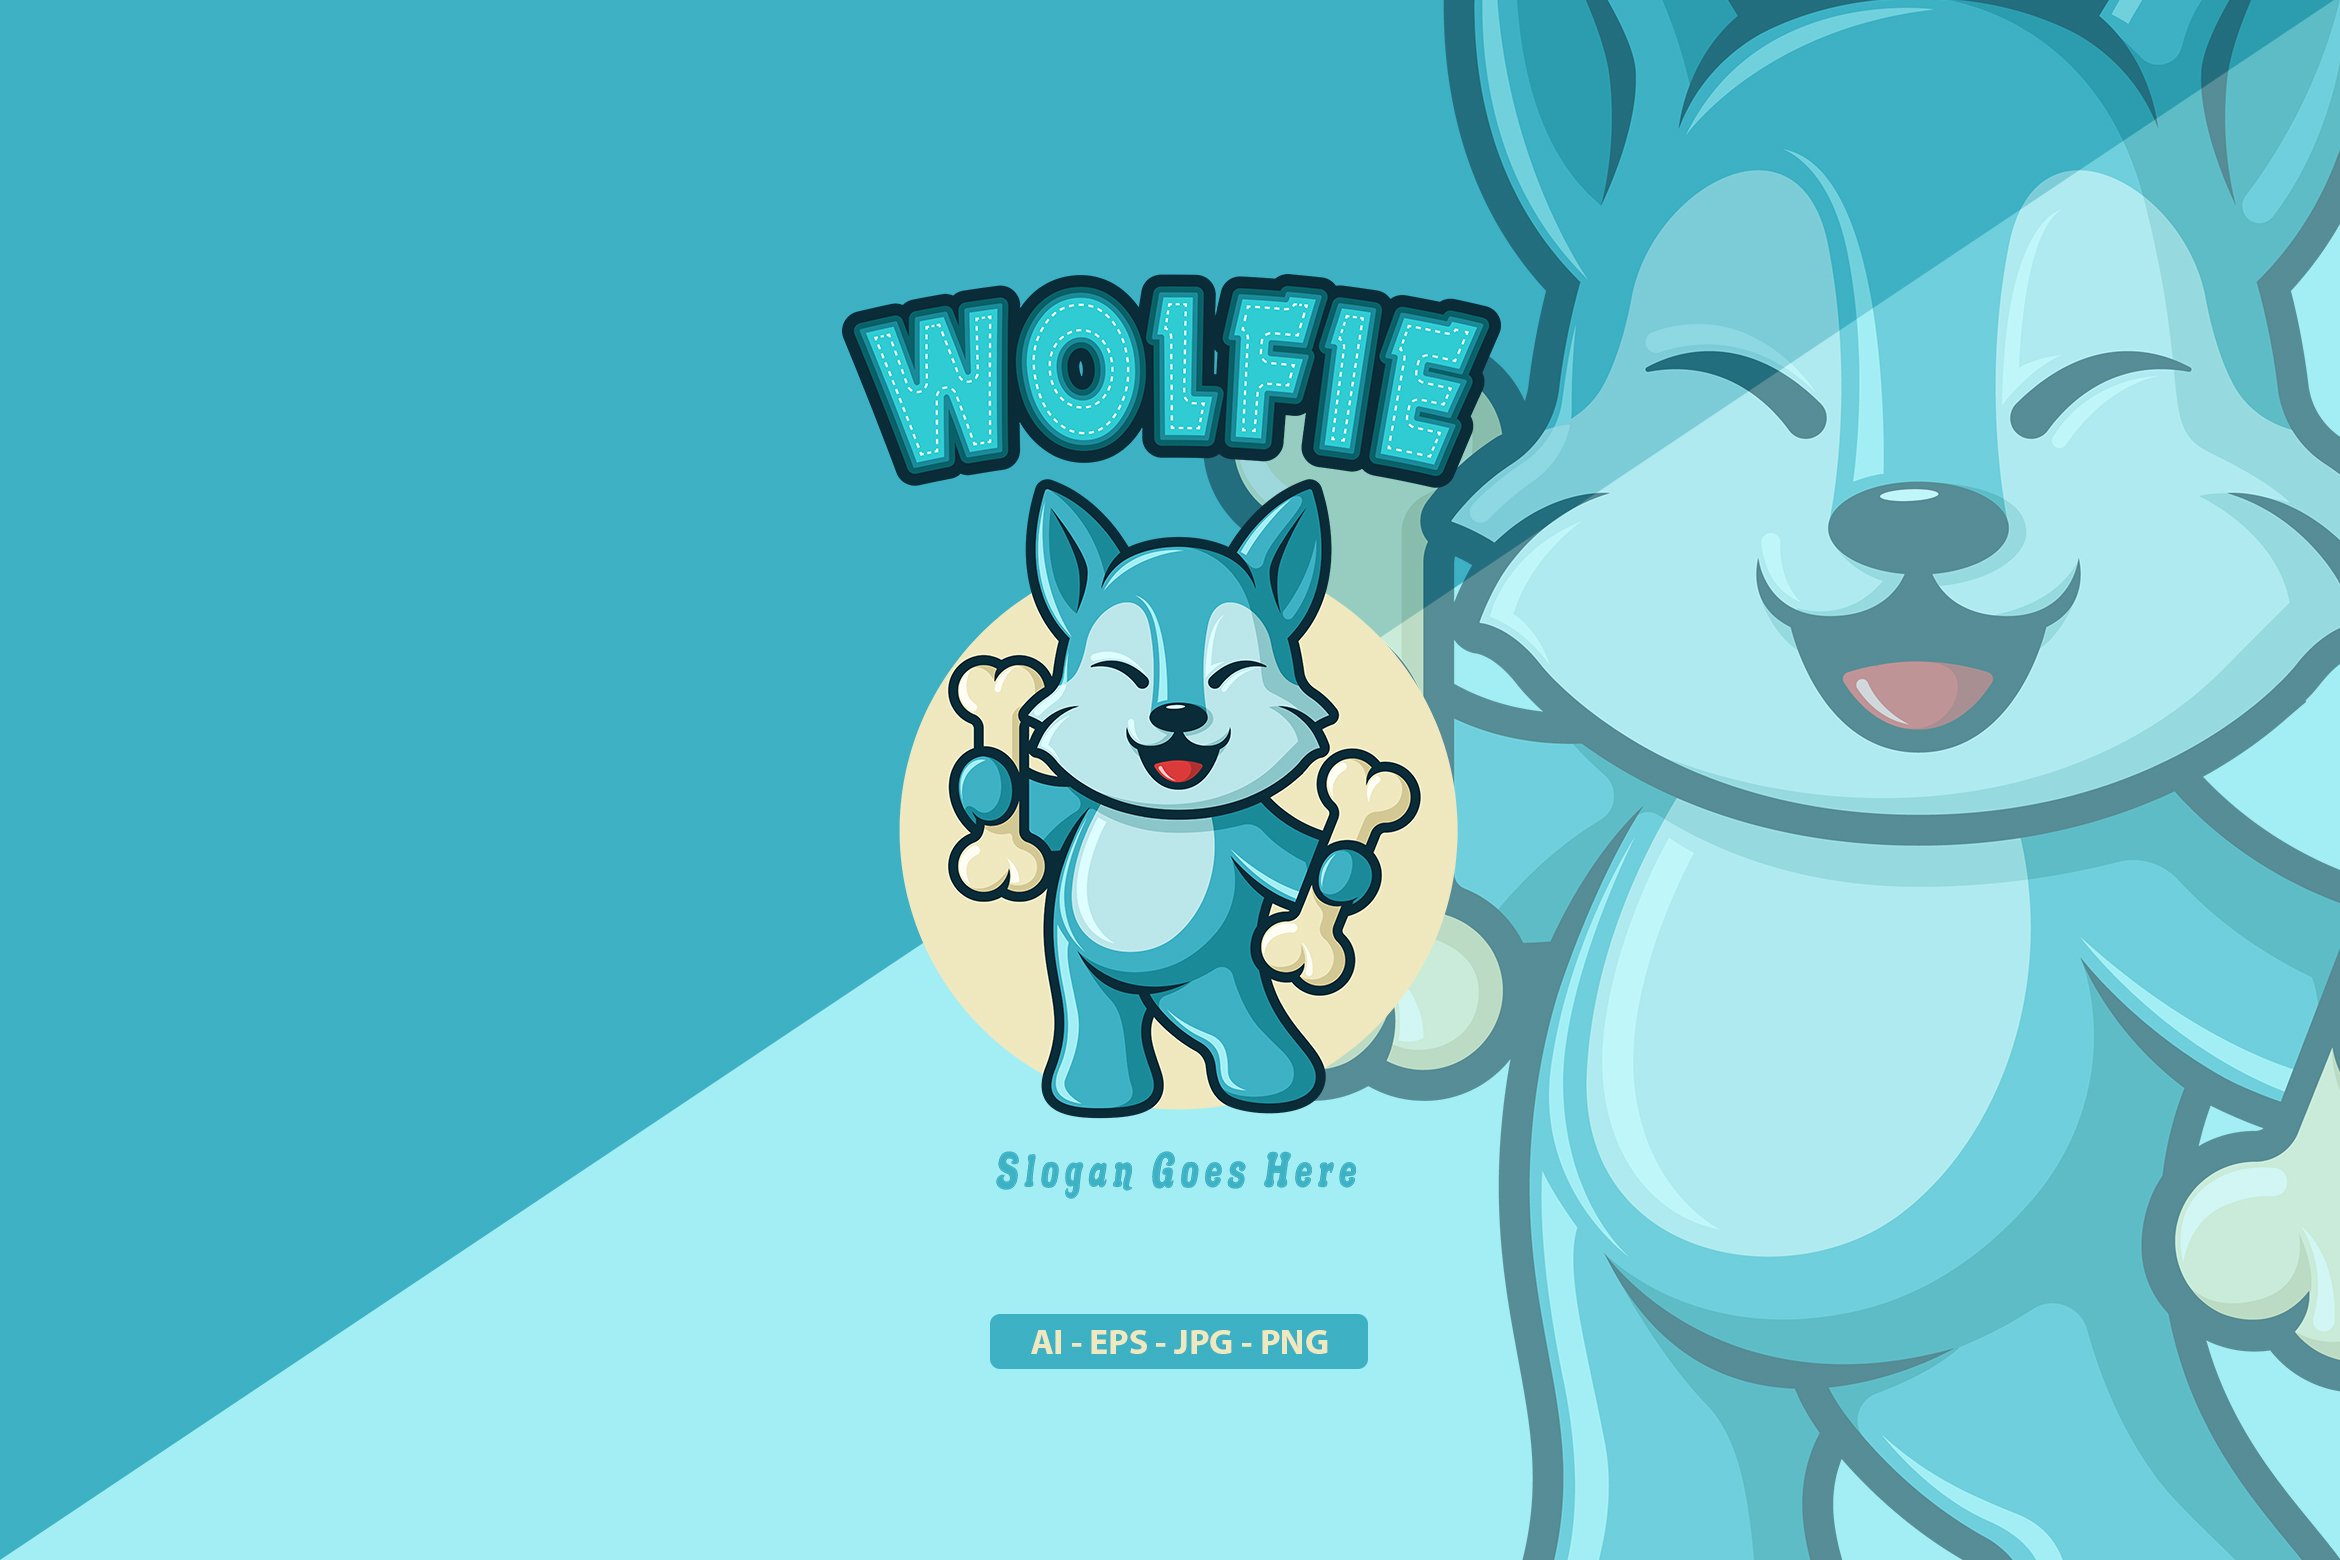 Wolf - Mascot Logo cover image.